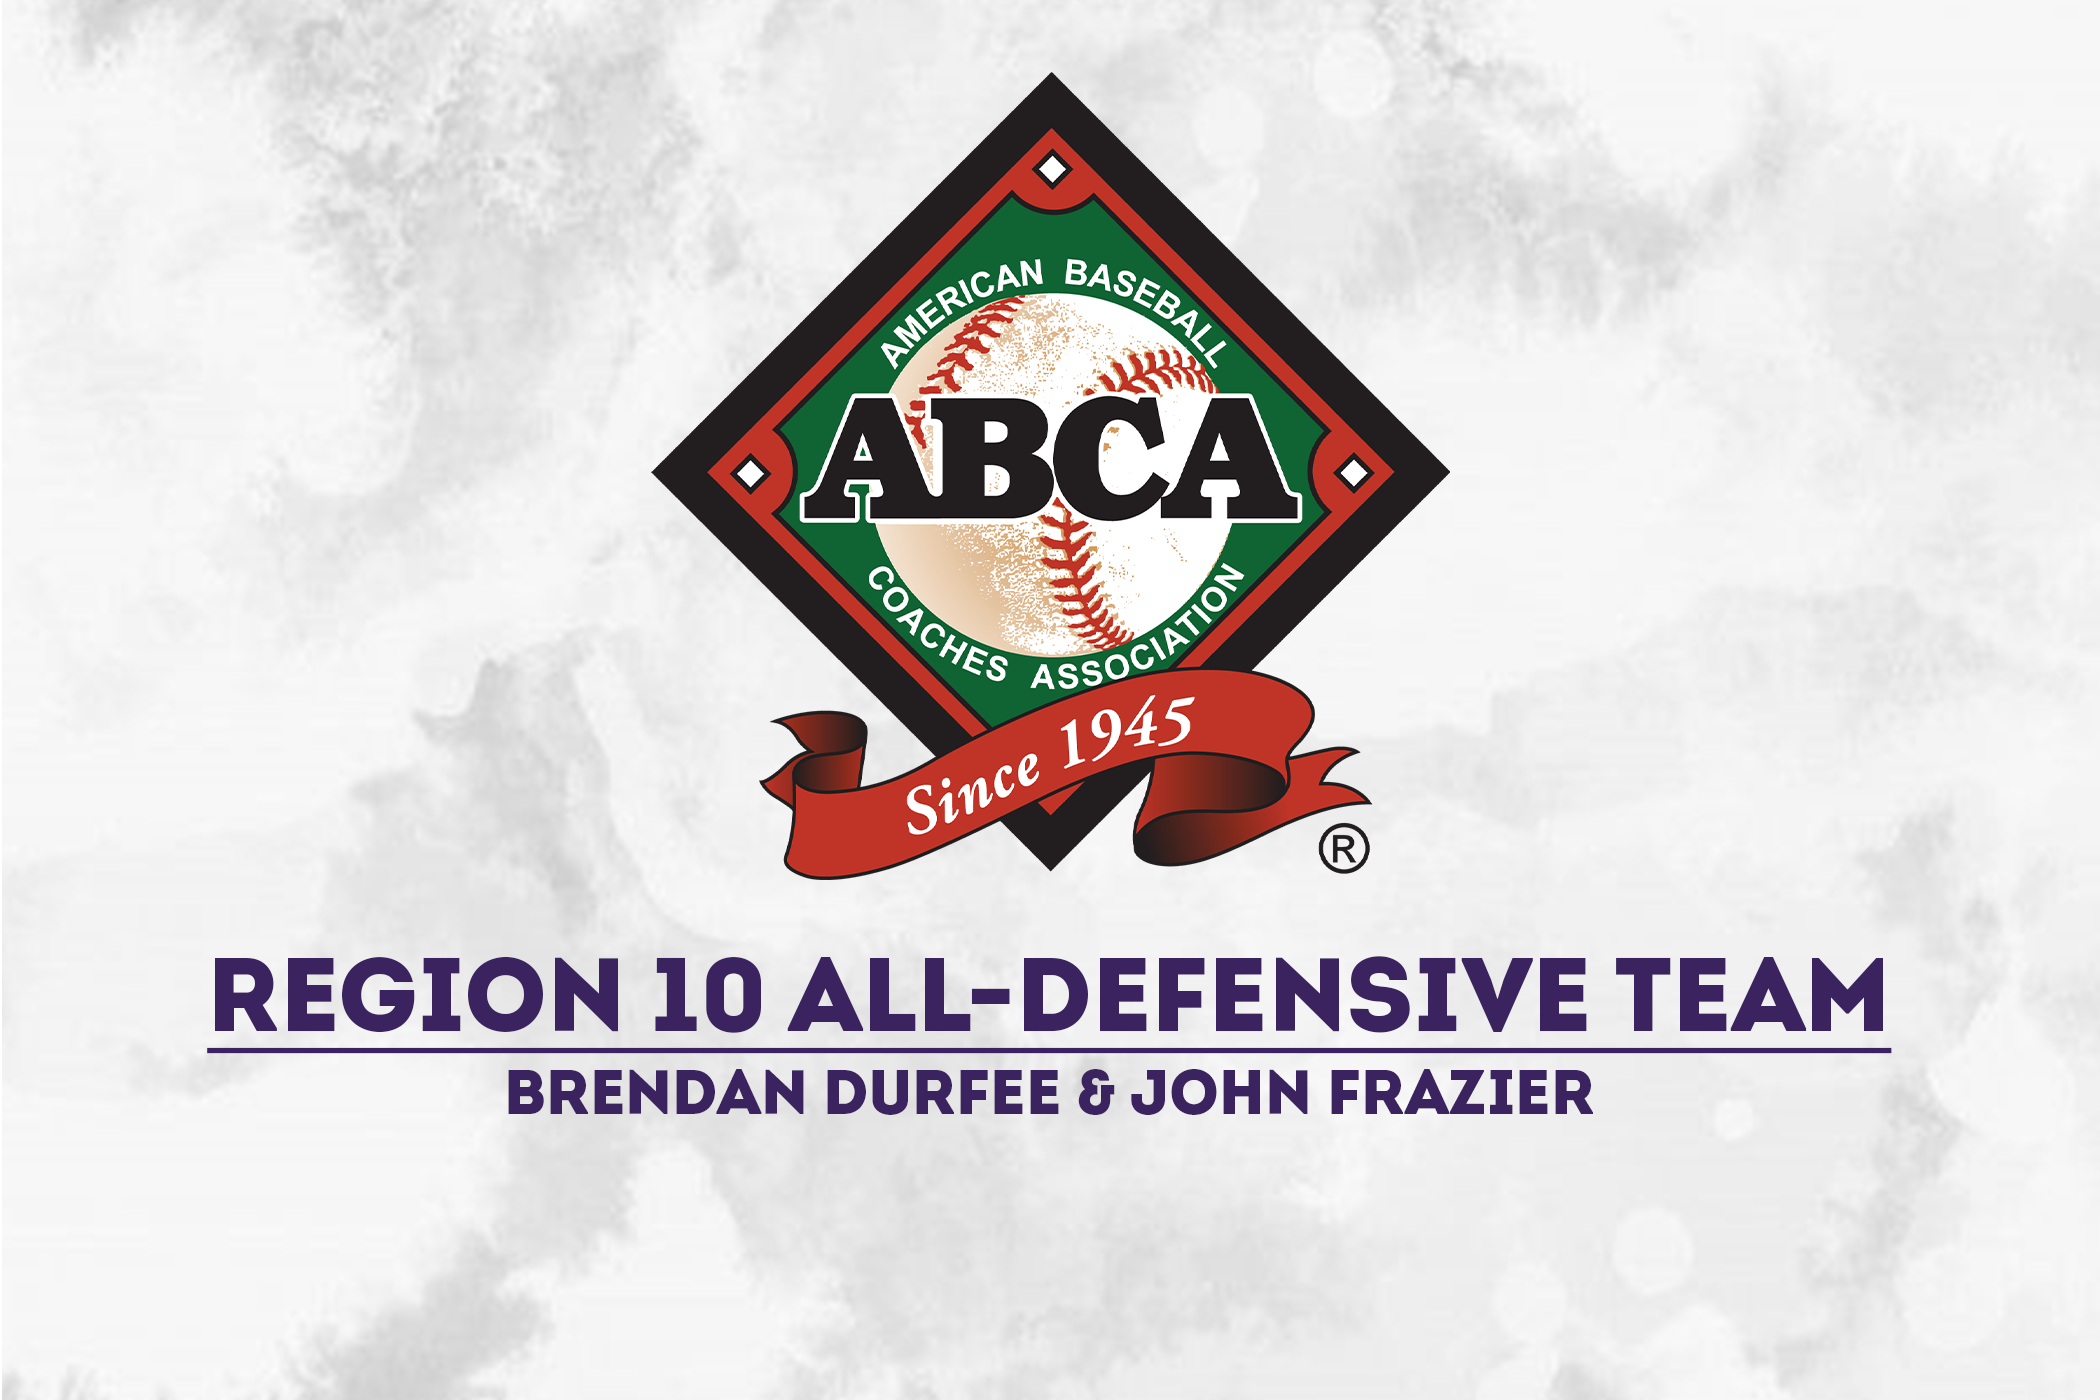 Durfee, Frazier Named Region 10 All-Defensive Team